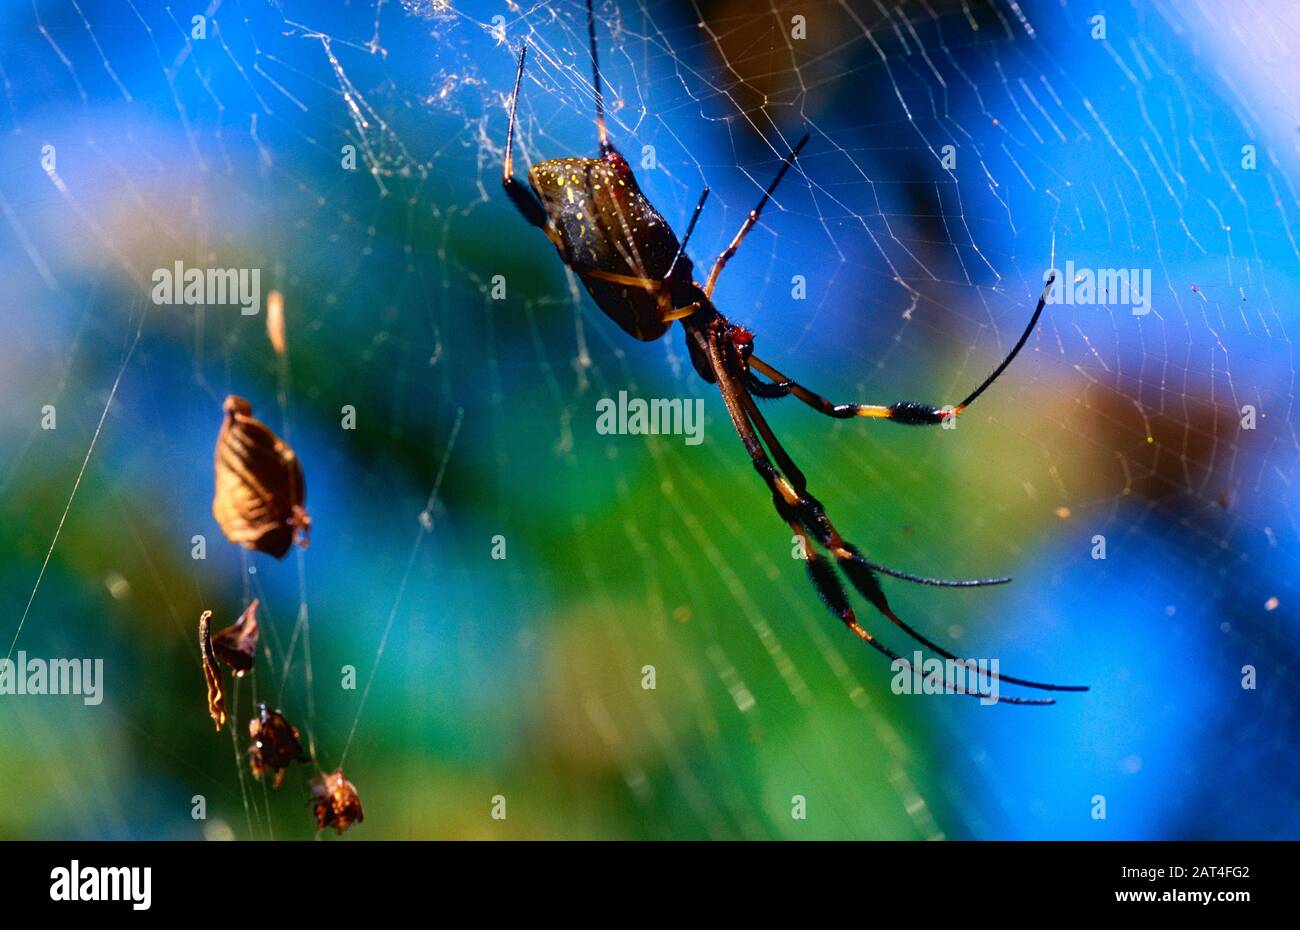 Golden Orb spider, Nephila clavipes, Araneidae, in the web, spider, animal, Costa Rica Stock Photo